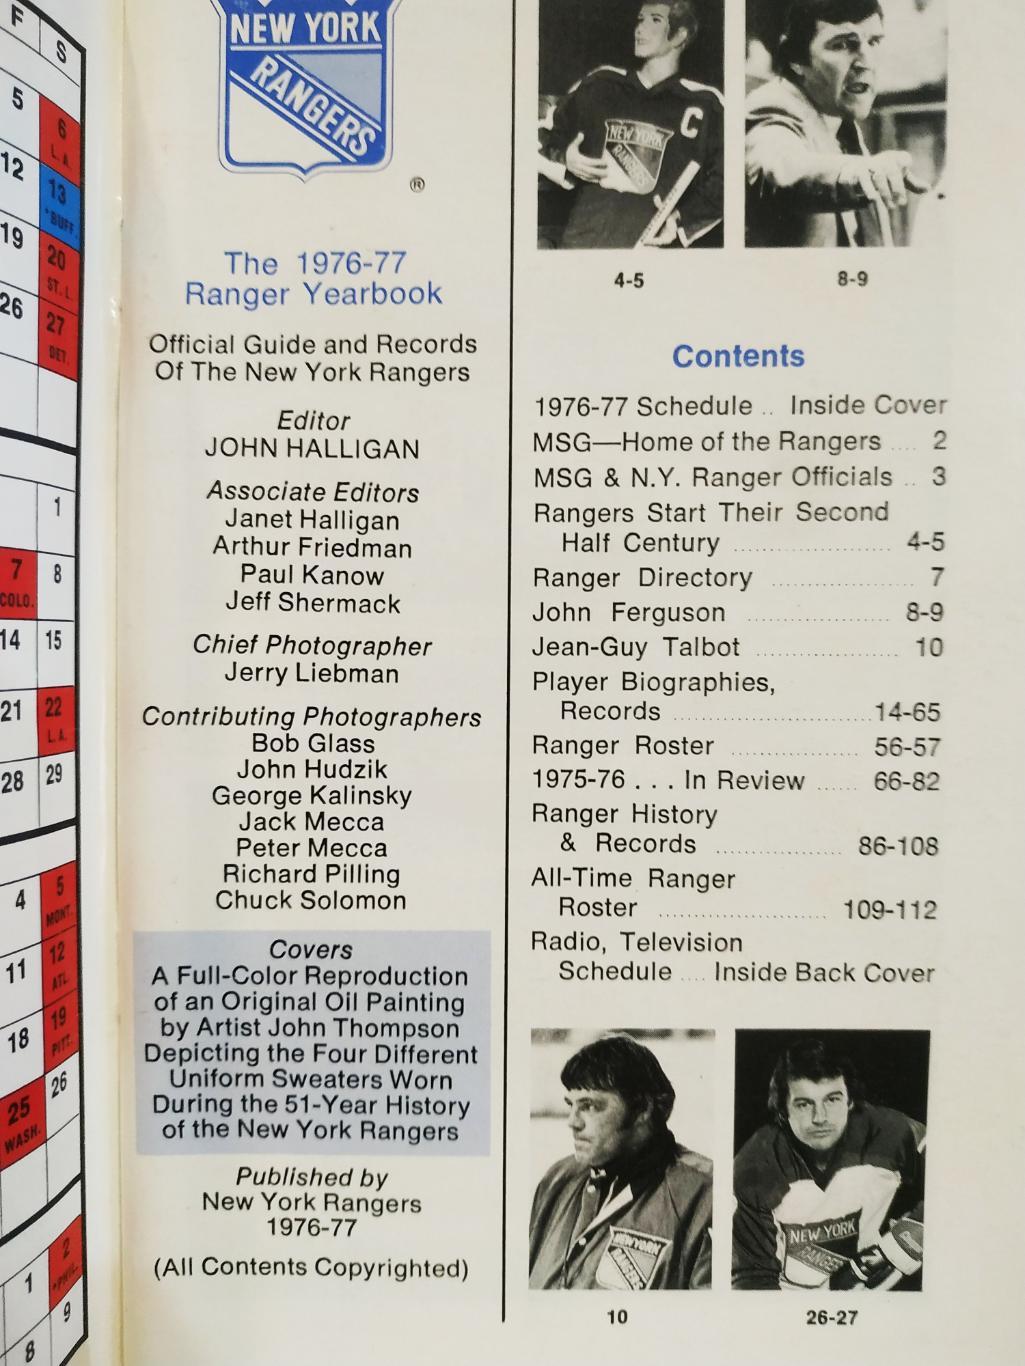 ХОККЕЙ СПРАВОЧНИК ЕЖЕГОДНИК НХЛ РЕЙНДЖЕРС 1976-77 NEW YORK RANGERS YEARBOOK 1